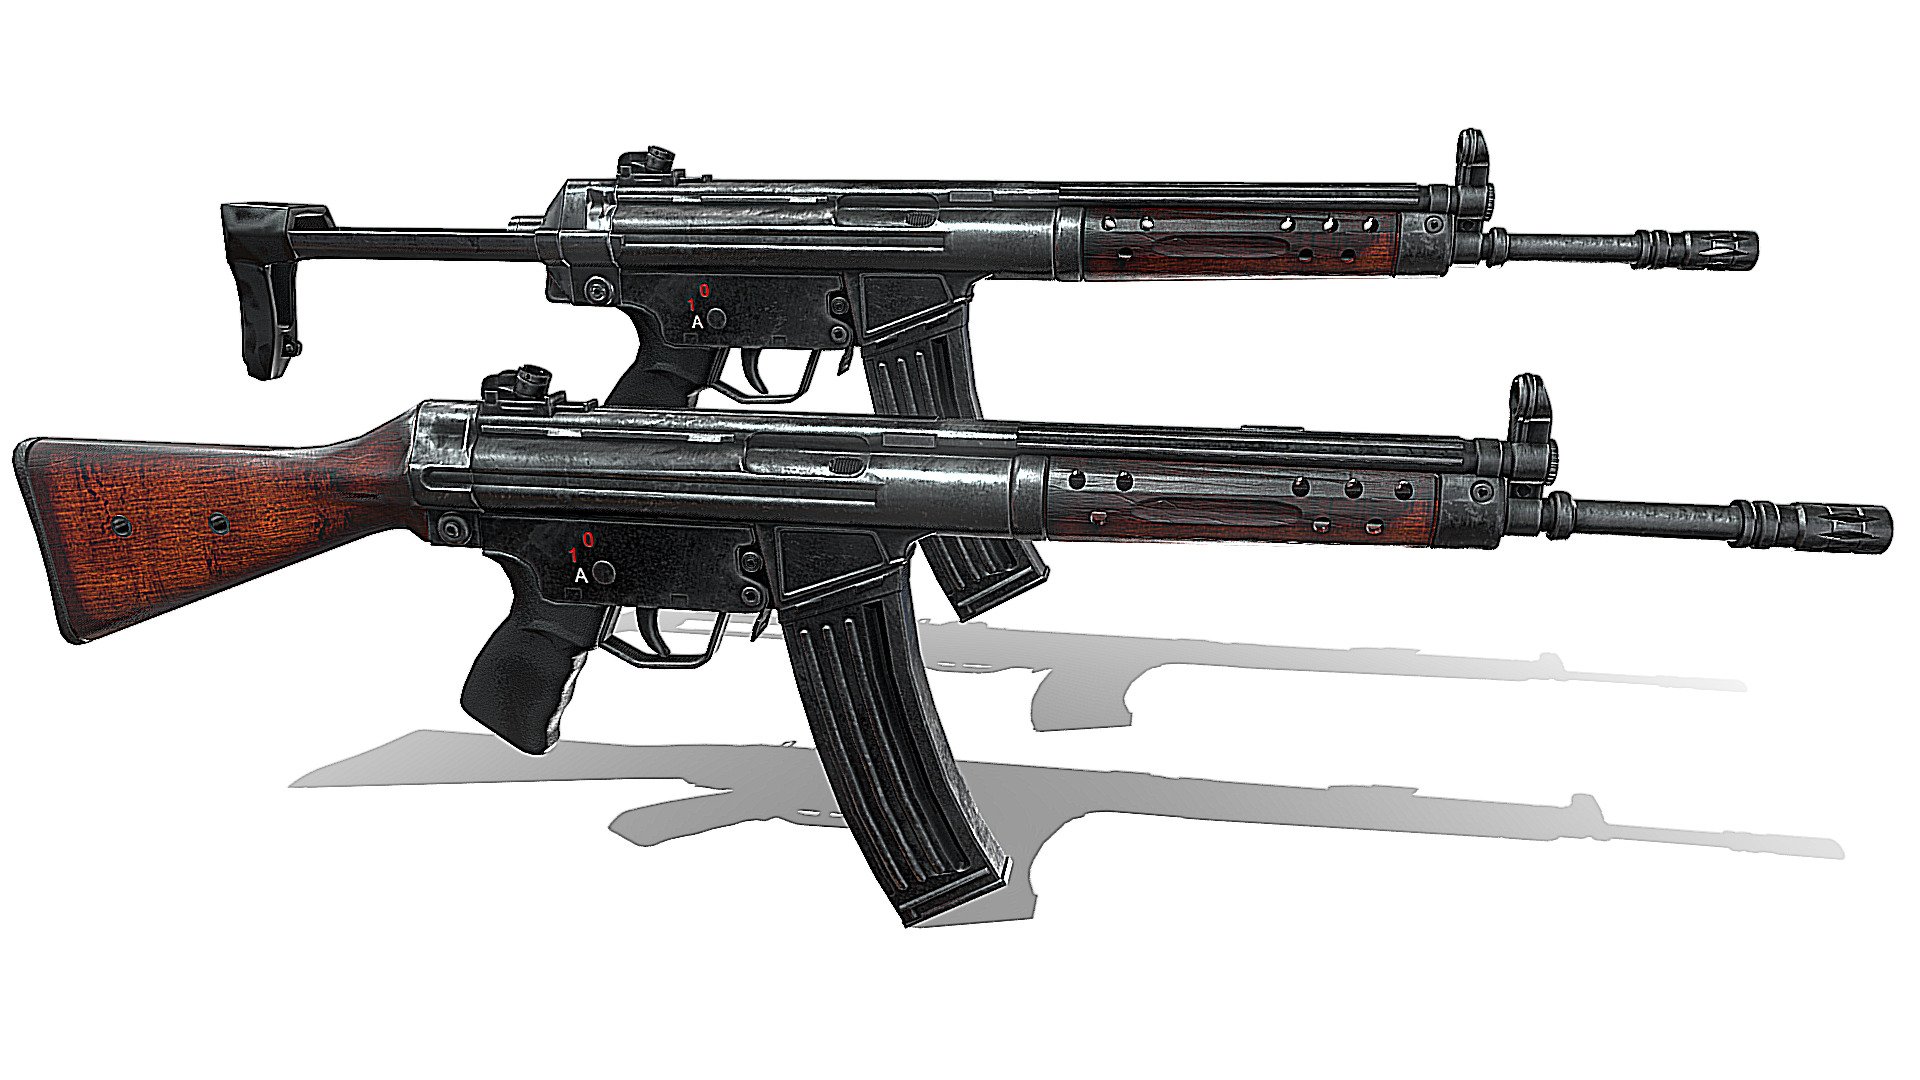 HK33

Features: 



4K Textures,Jpeg 11/12 compression Format



FBX 3D format



Two Weapon Variants


 - HK33 - Buy Royalty Free 3D model by Jm0nkey 3d model